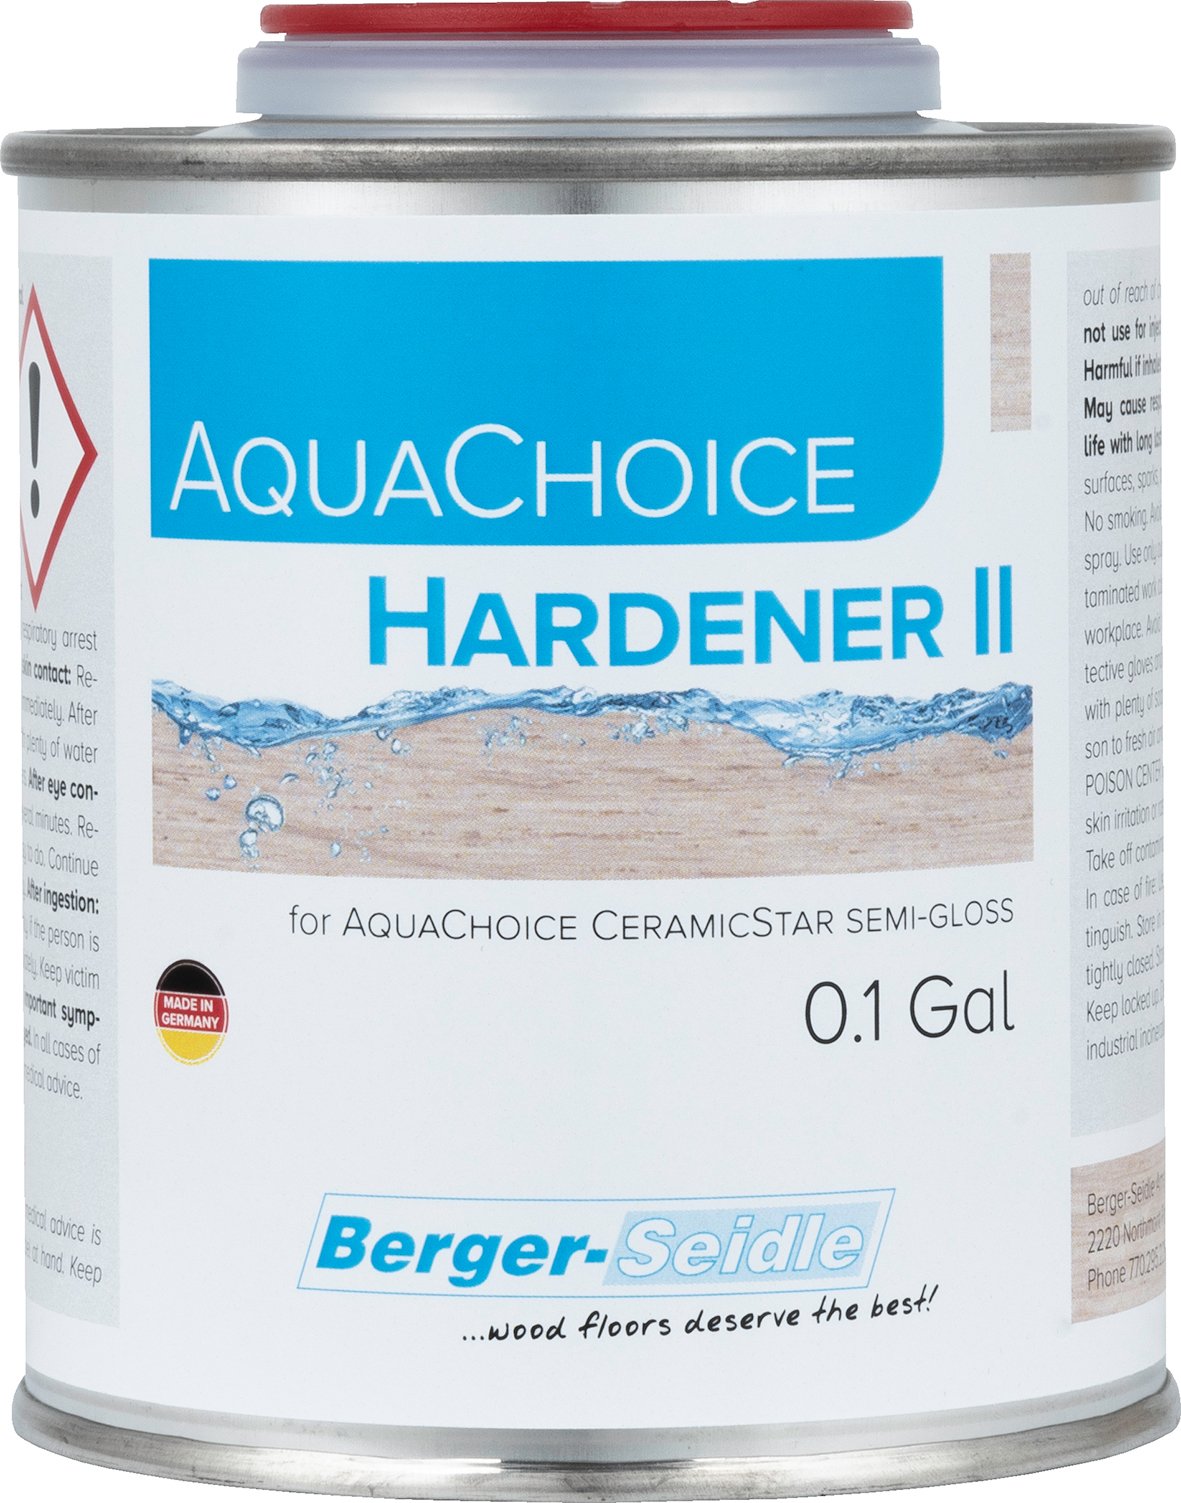 AquaChoice Hardener II 0.1Gal rgb.jpg